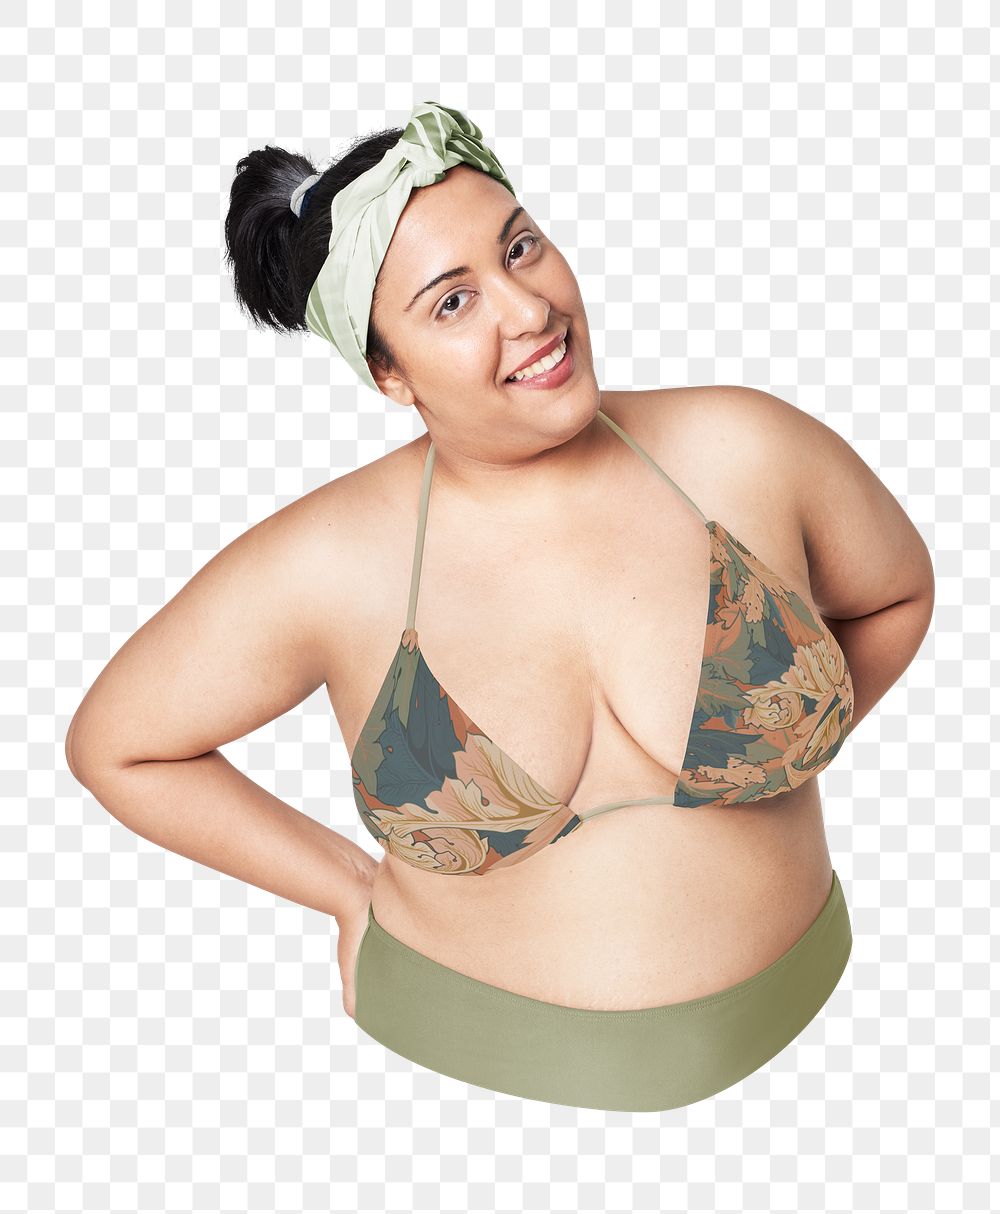 Png woman in green bikini sticker, transparent background